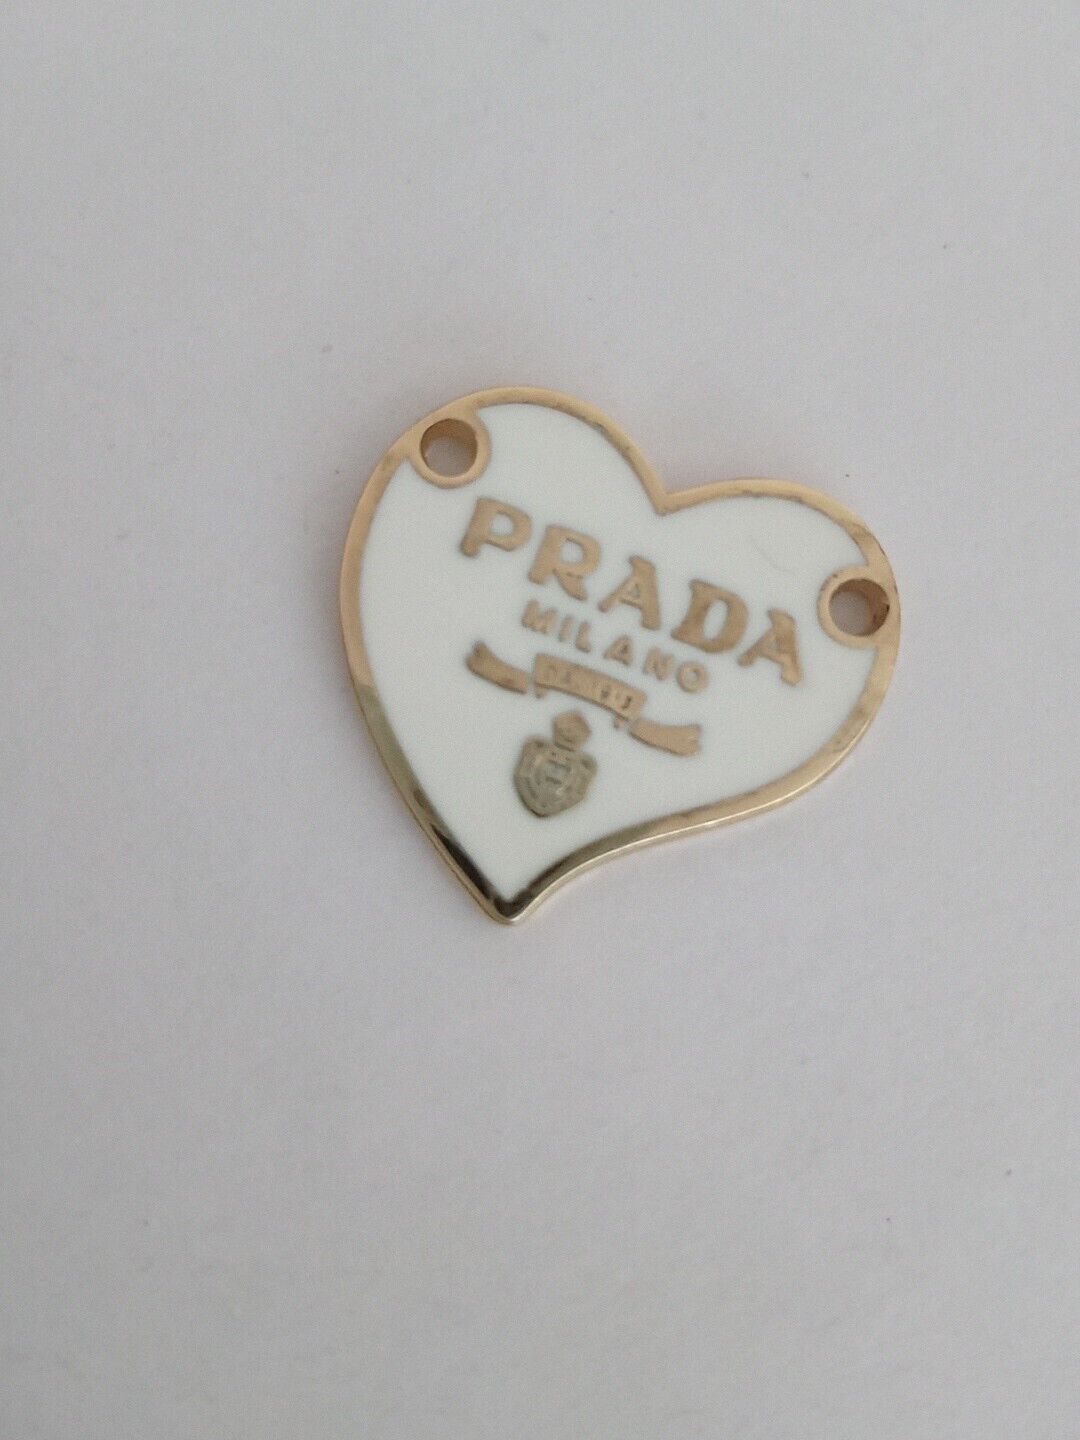 One   24mmPrada Logo Heart   with trim  Gold tone Button  Zipperpull